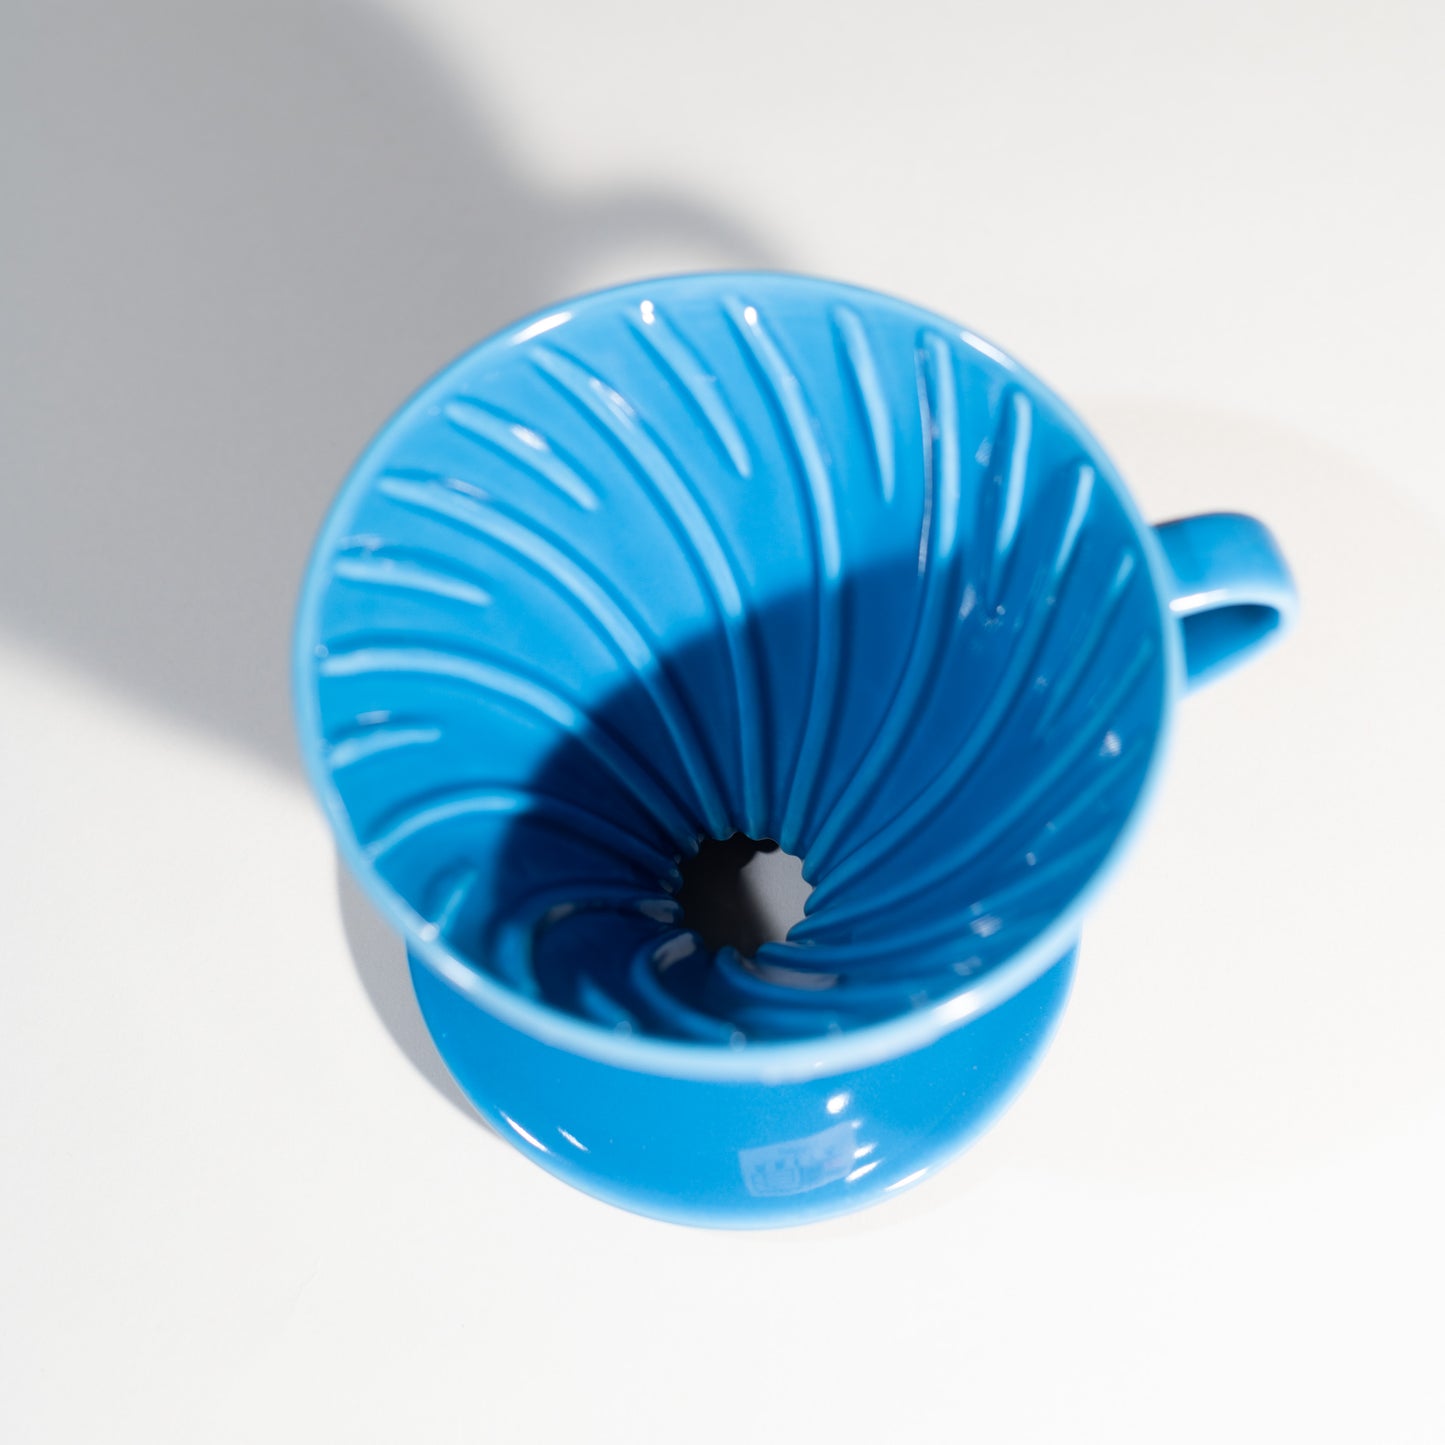 Hario Ceramic v60 02 Blue Coffee Dripper